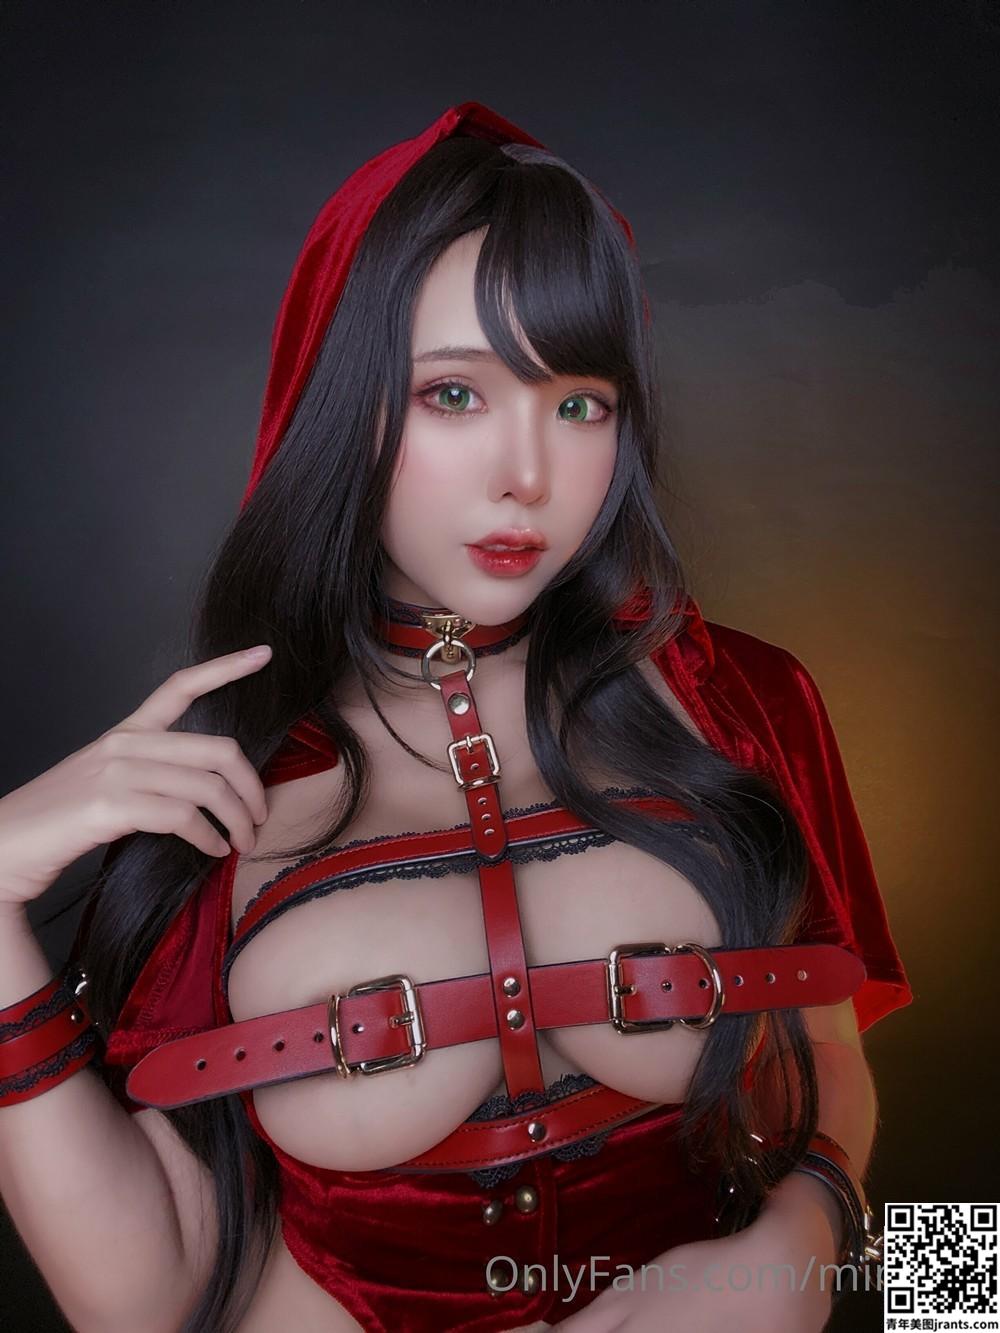 Minichu &#8211; Red Riding Hood